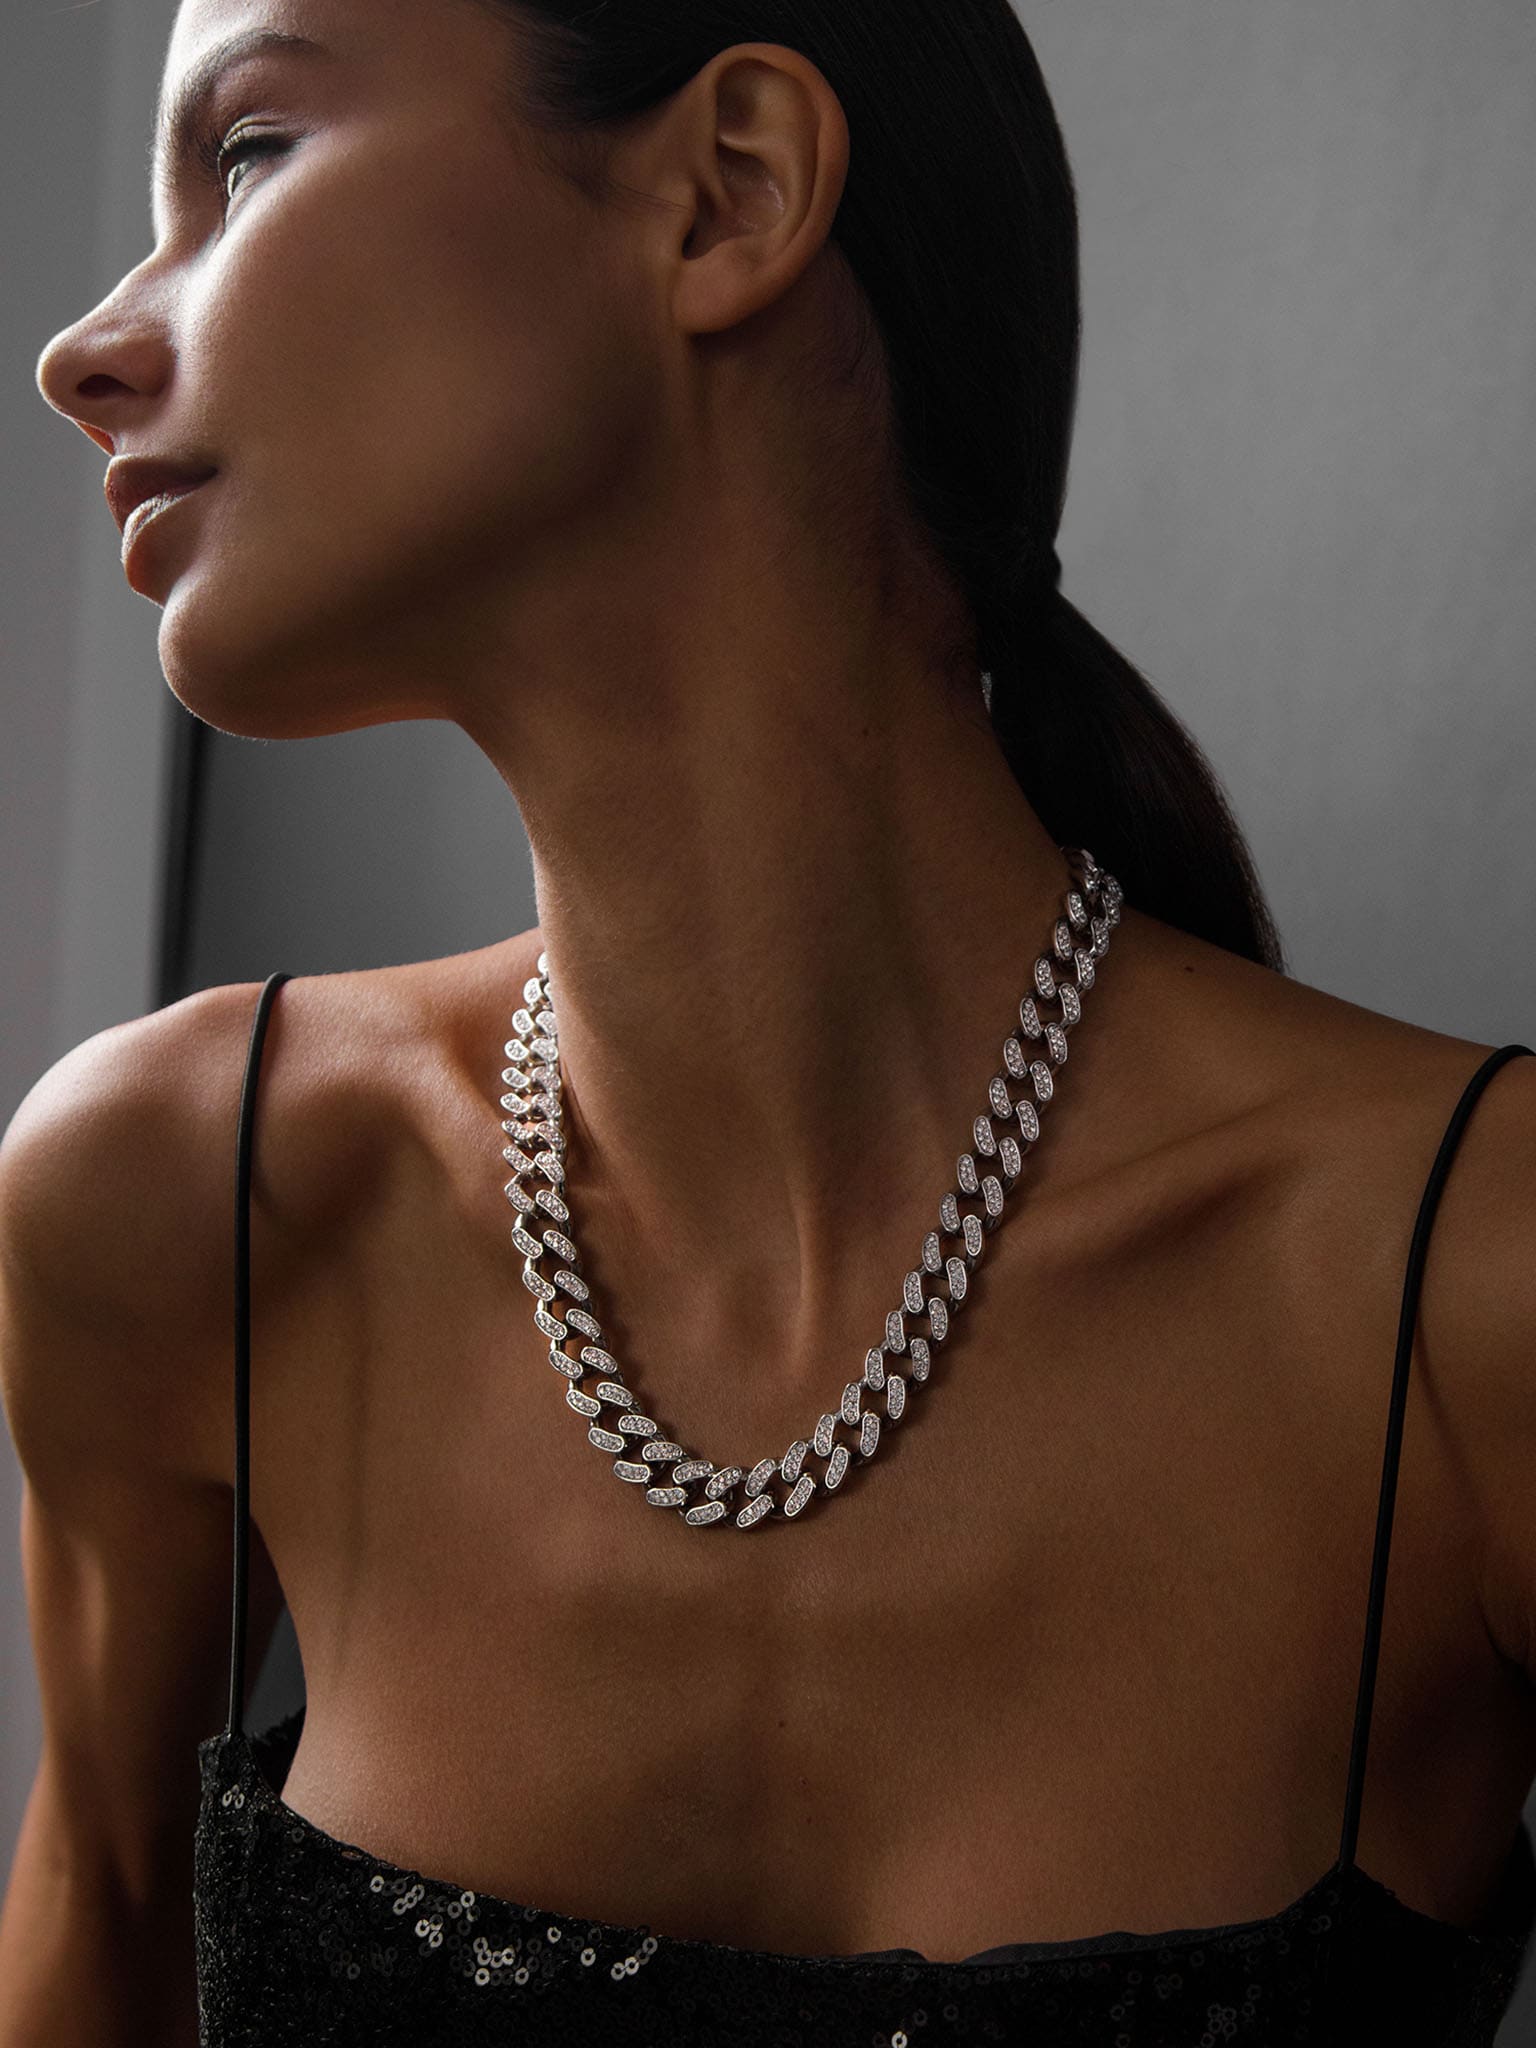 Rhinestone chain necklace